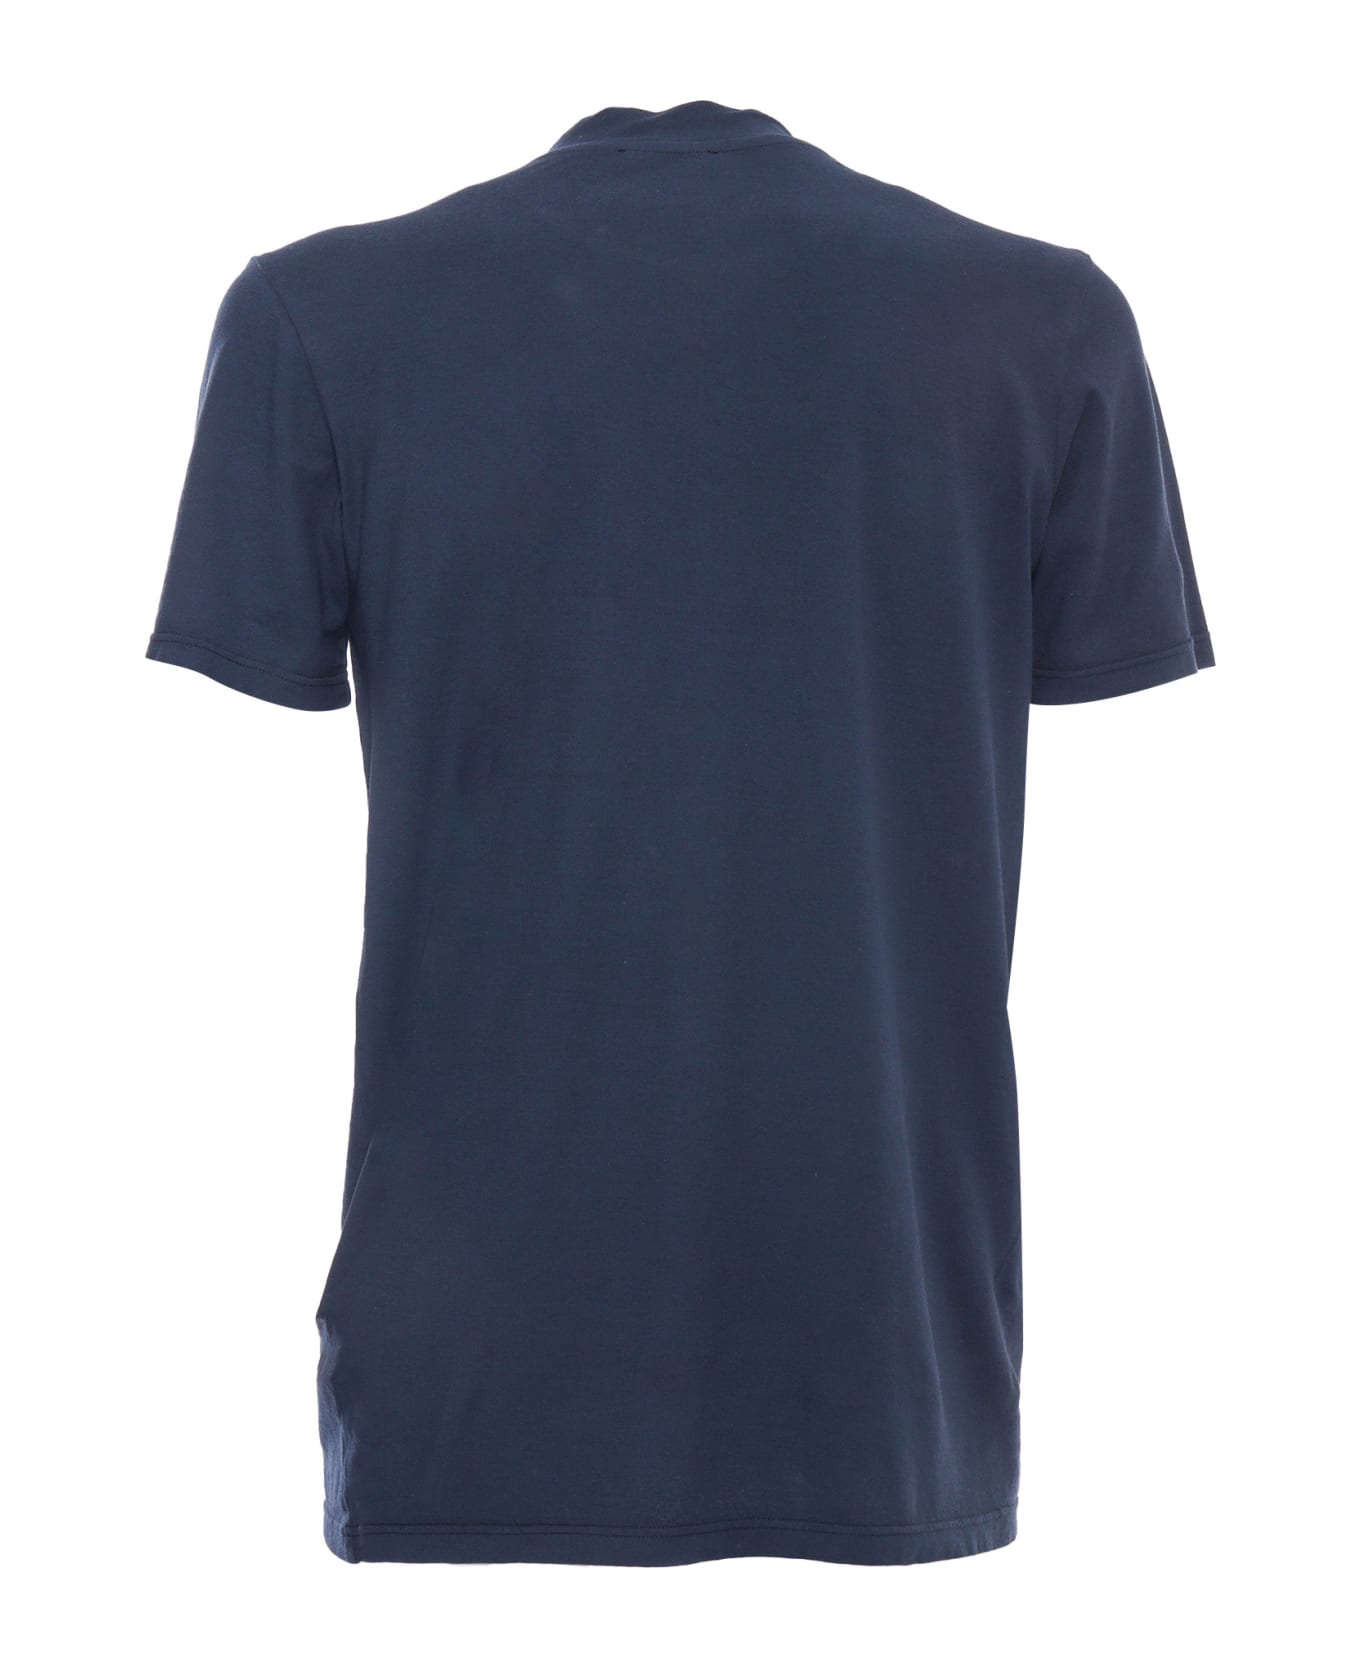 Ballantyne Blue T-shirt - BLUE